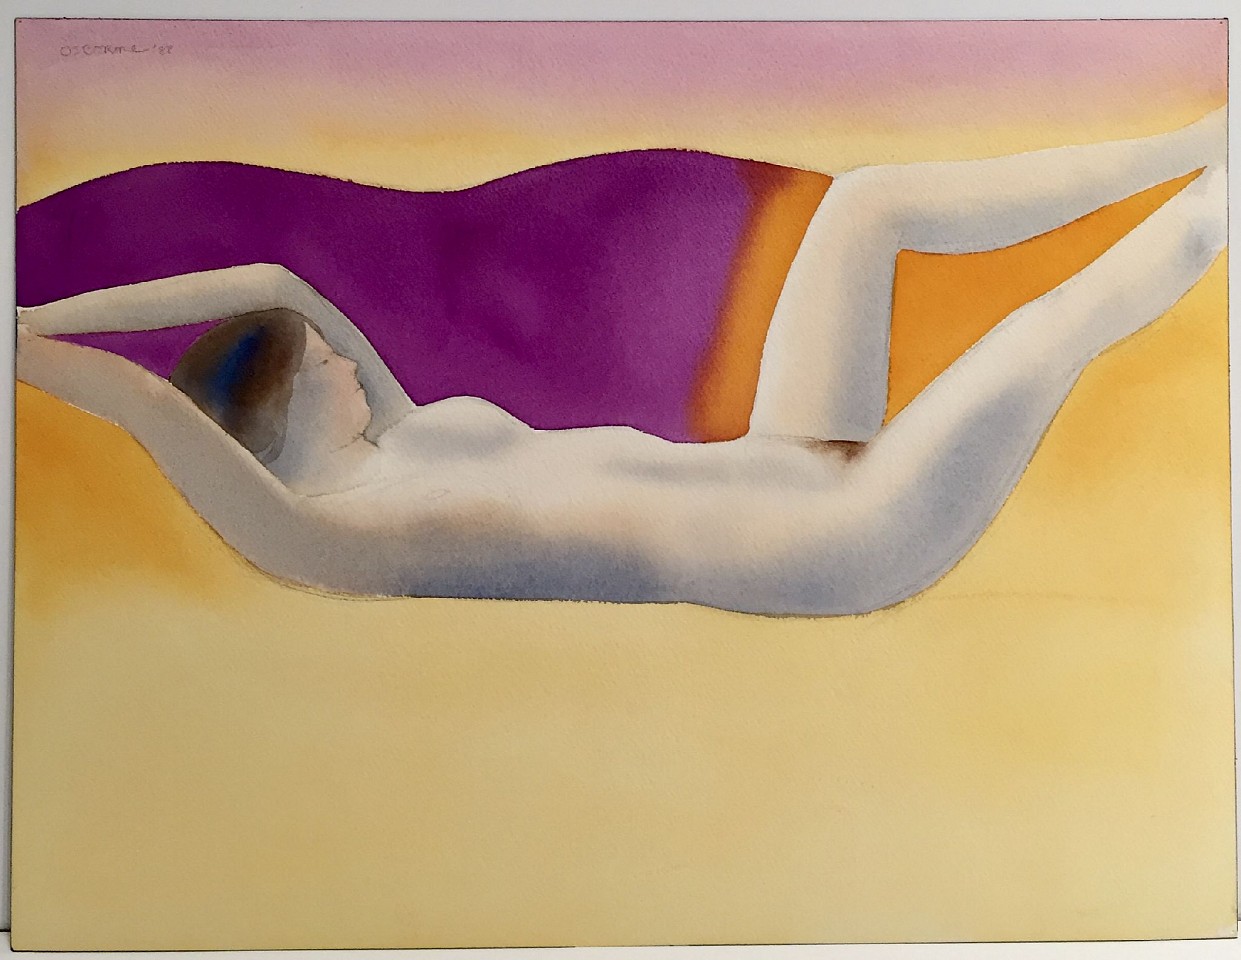 Elizabeth Osborne, Reclining Nude, 1988
Watercolor and pencil on paper, 12 x 16 in. (30.5 x 40.6 cm)
OSB-00117